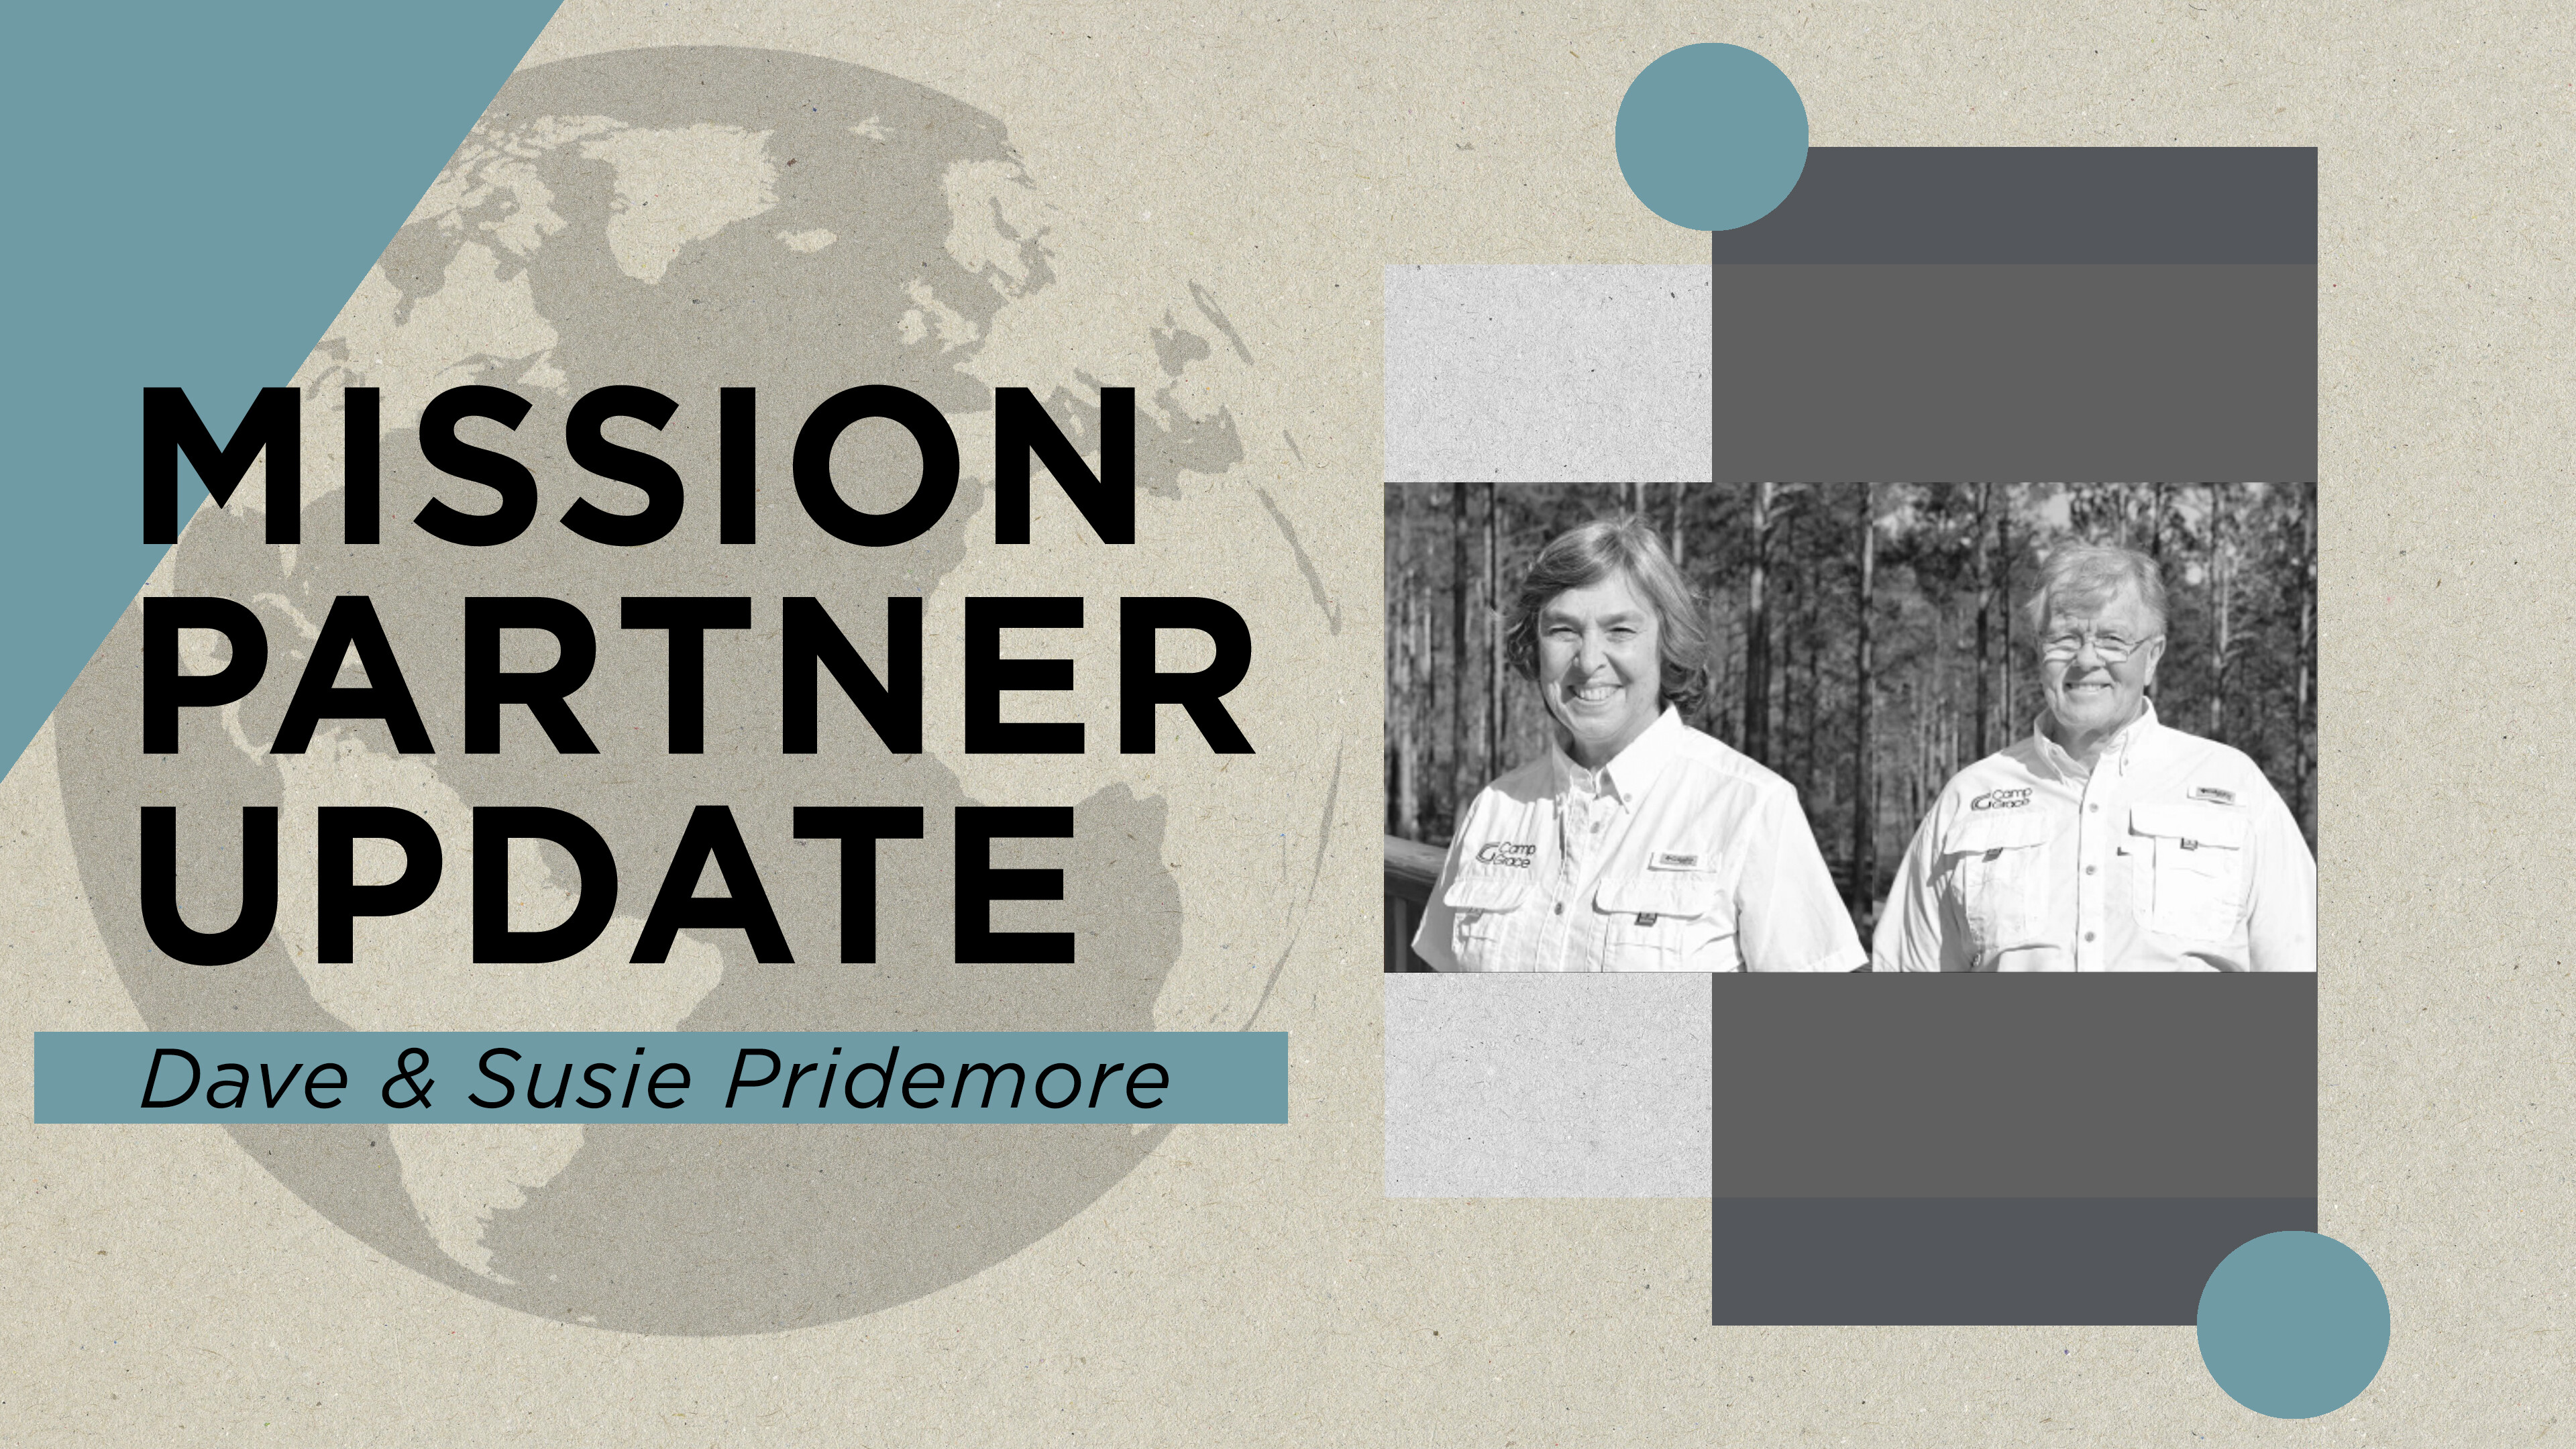 Mission Partner Update - The Pridemores